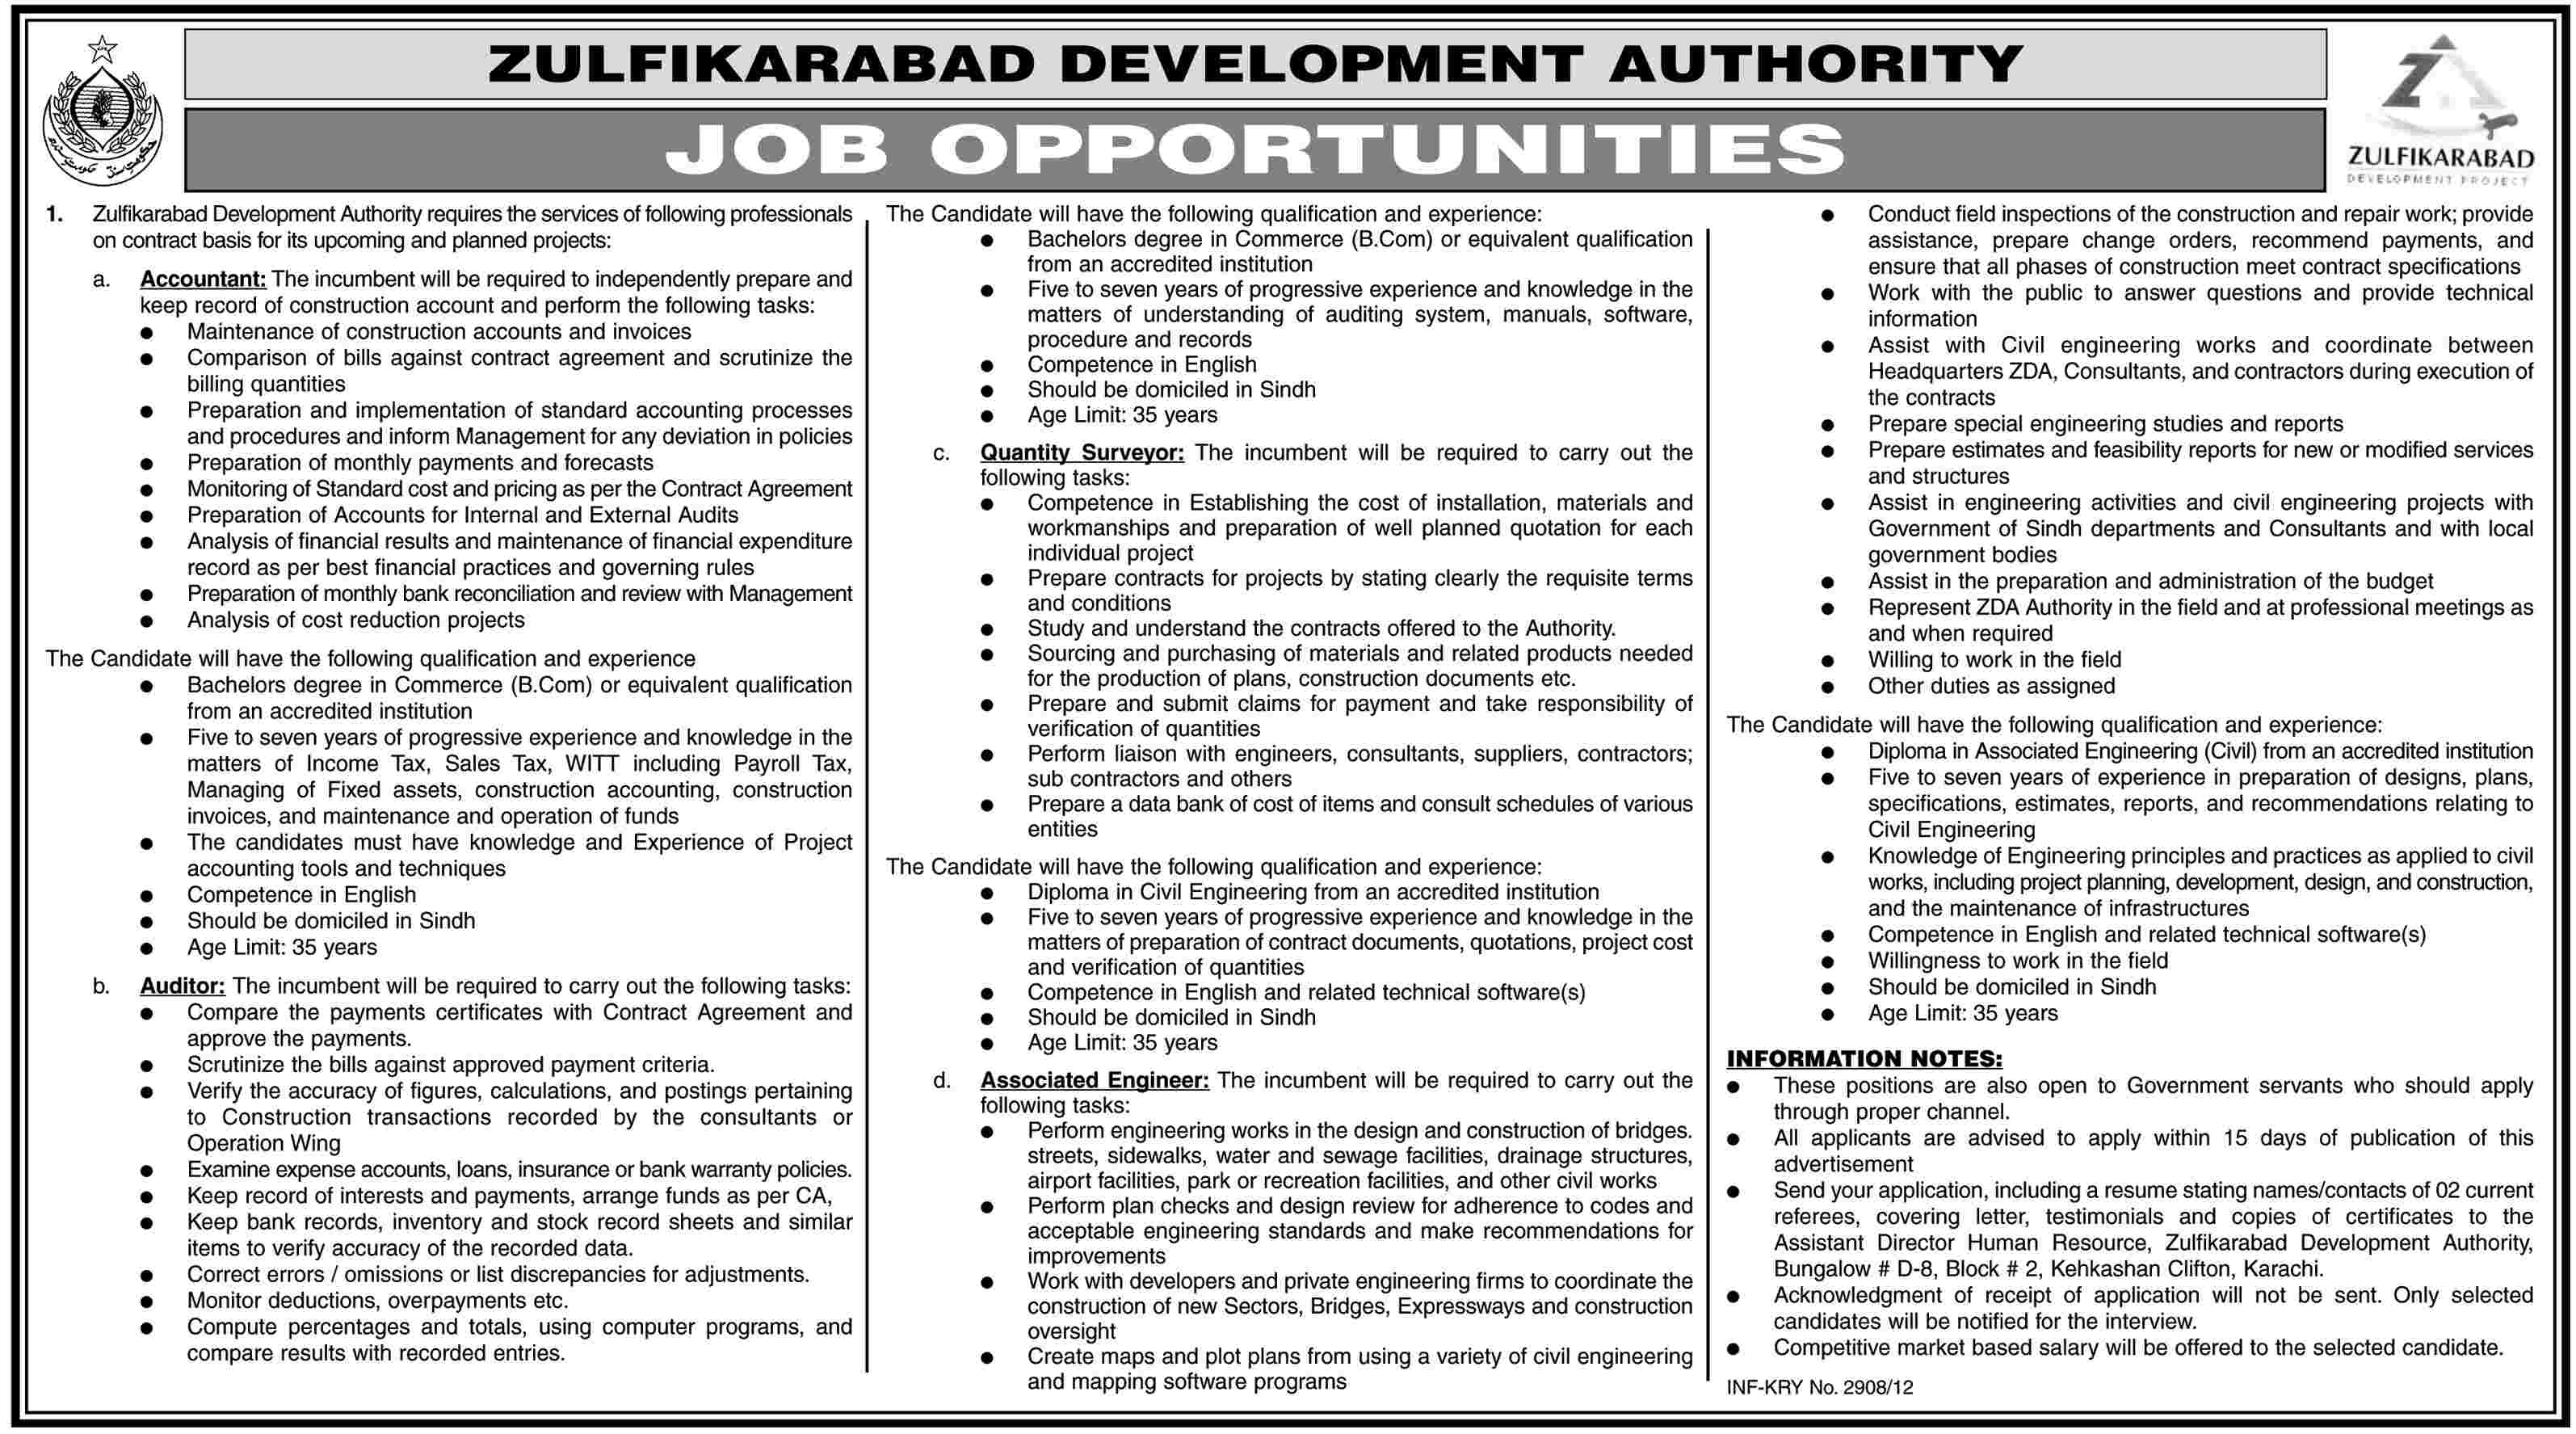 Zulfikarabad Development Authority (ZDA) Requires Accounts and Engineering Staff (Govt. job)